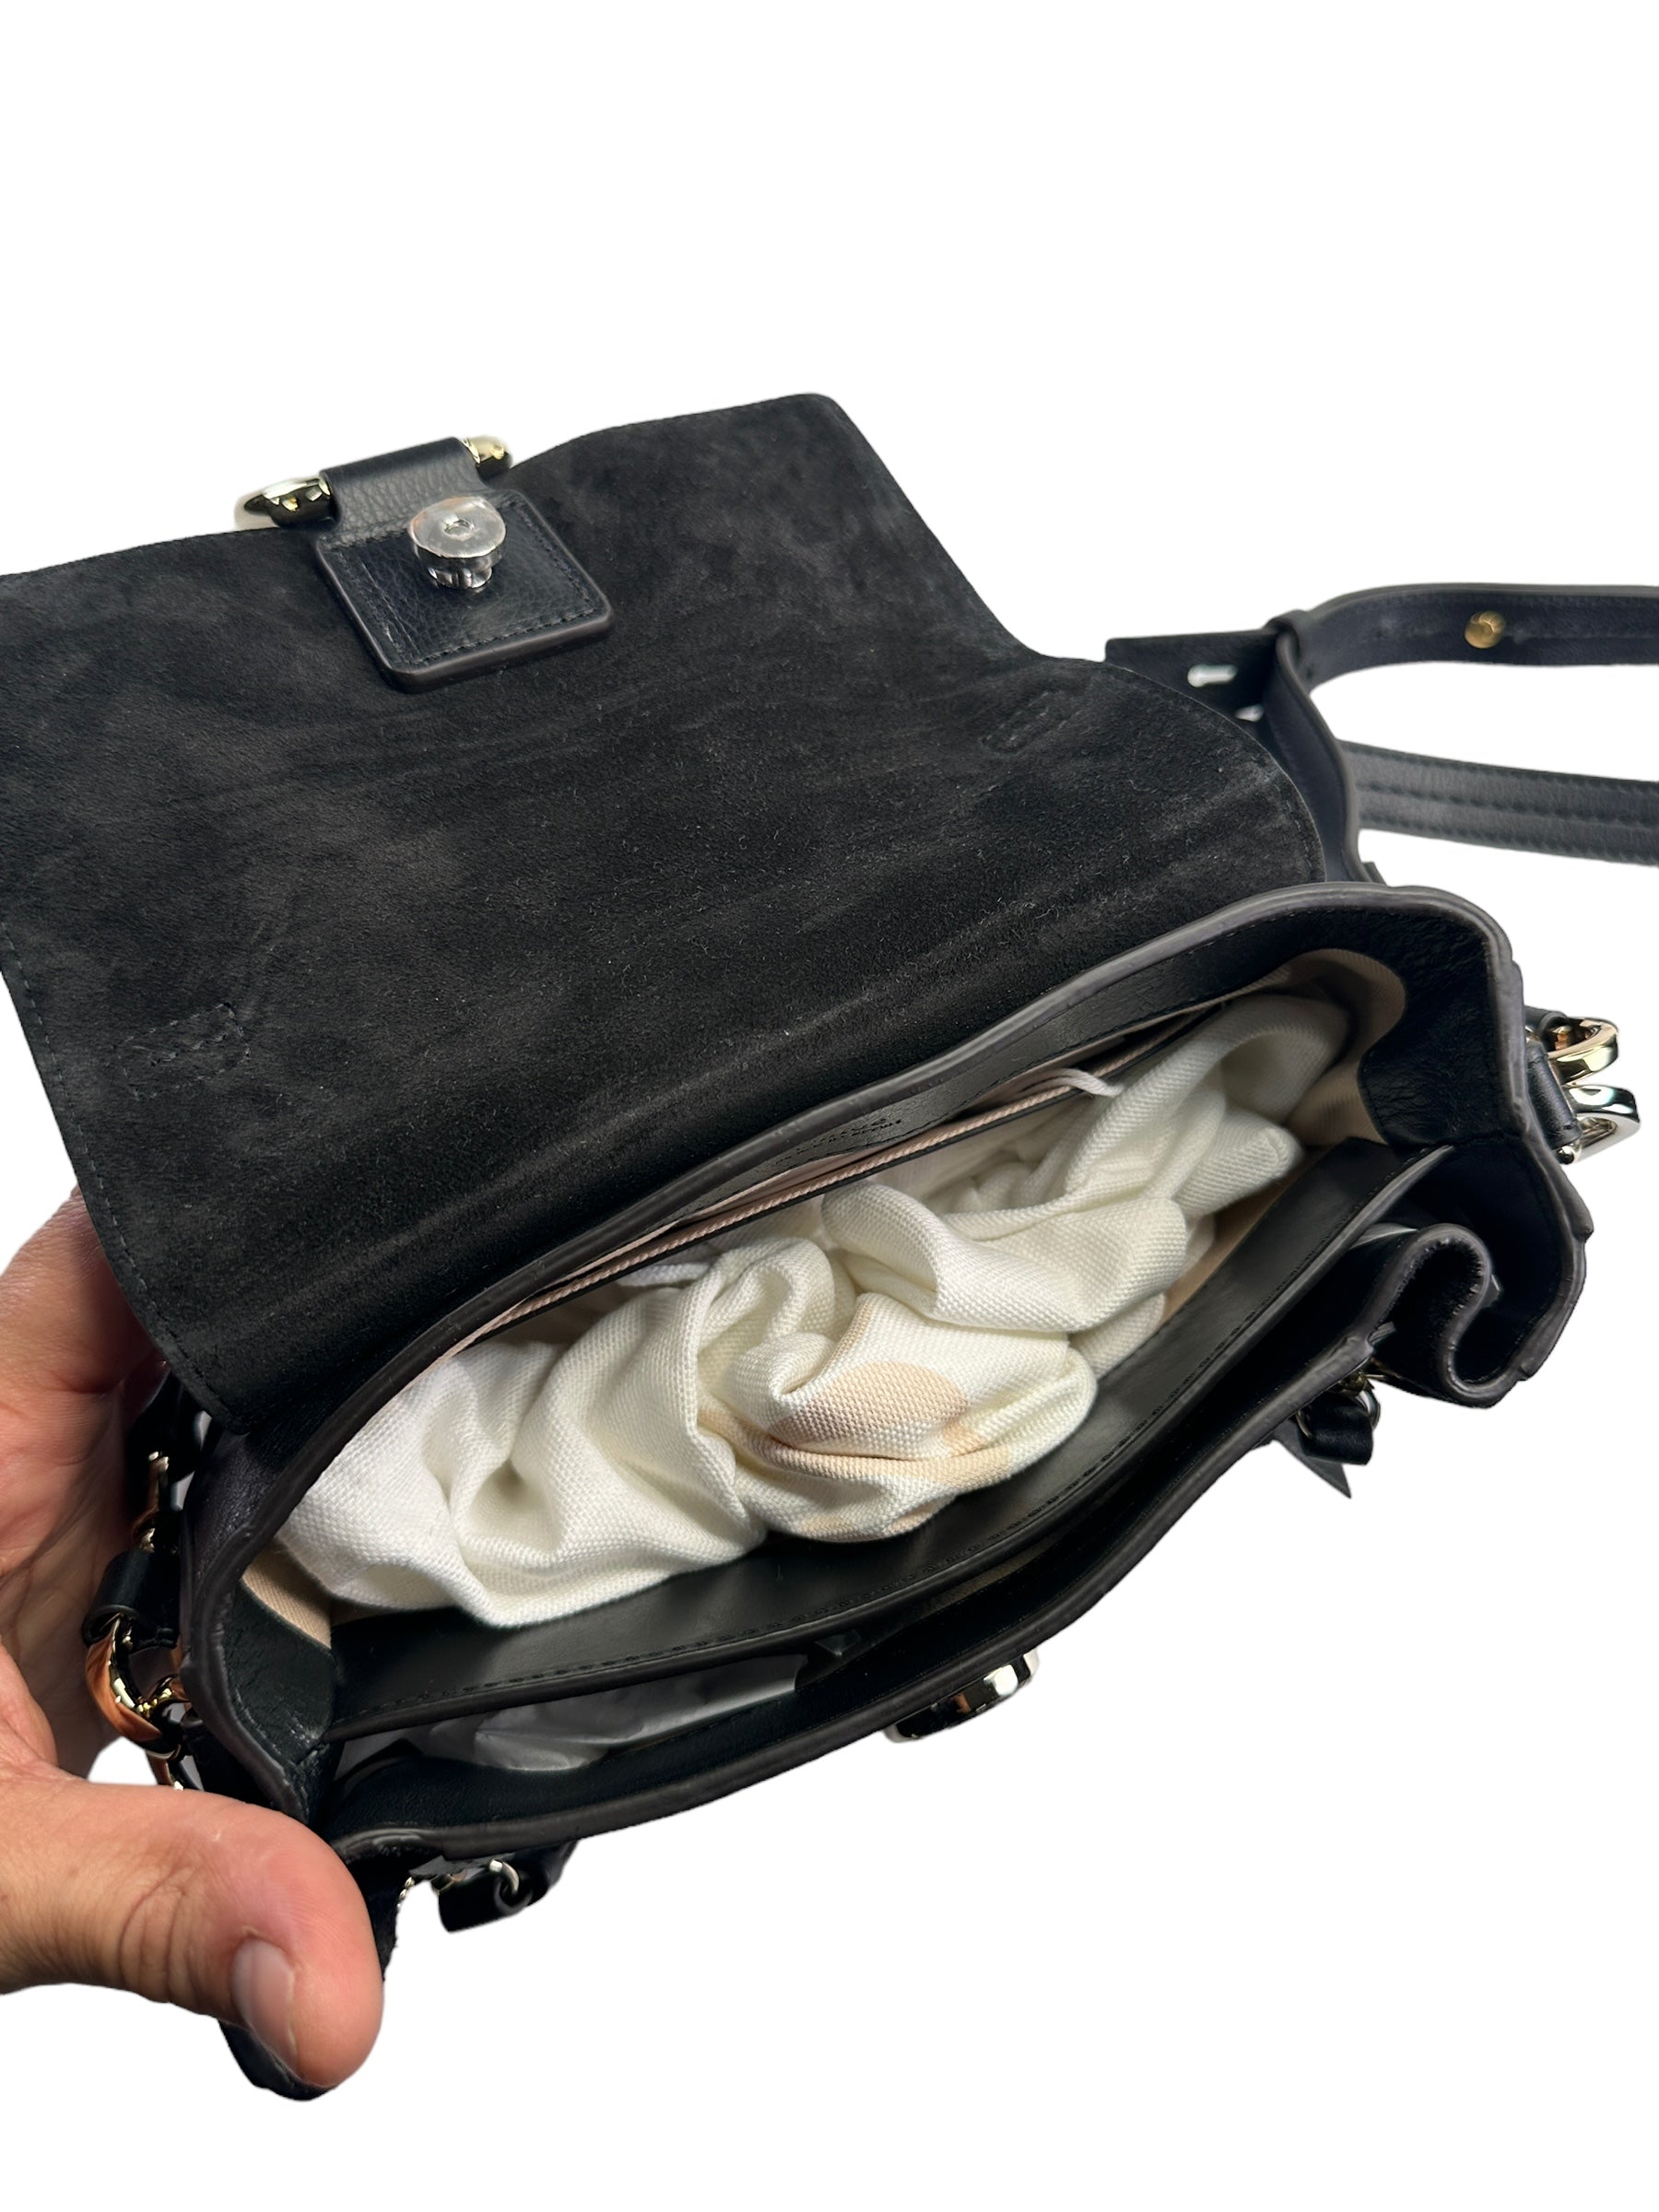 CHLOE Fayday Medium Leather Shoulder Bag / Black